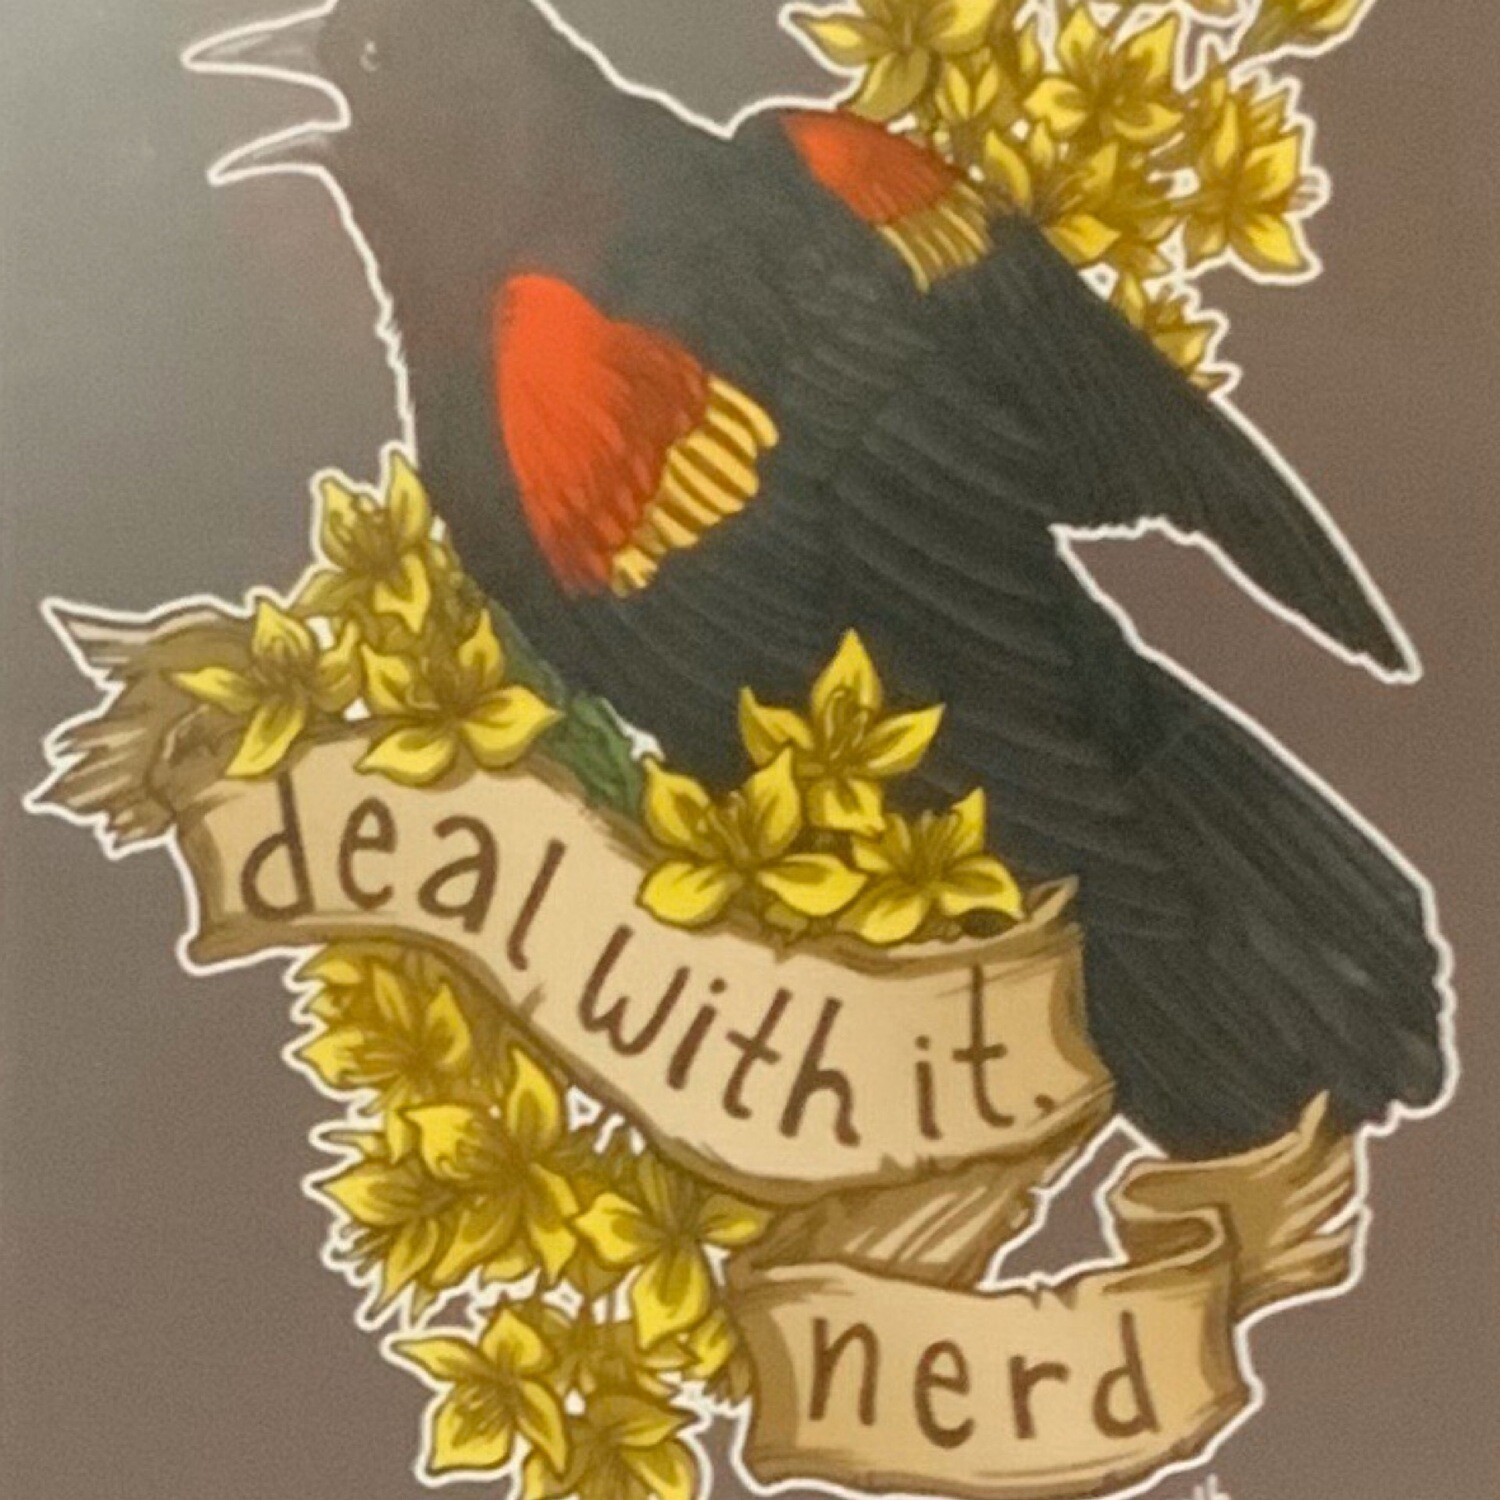 Deal With It Nerd - Print by Kiriska